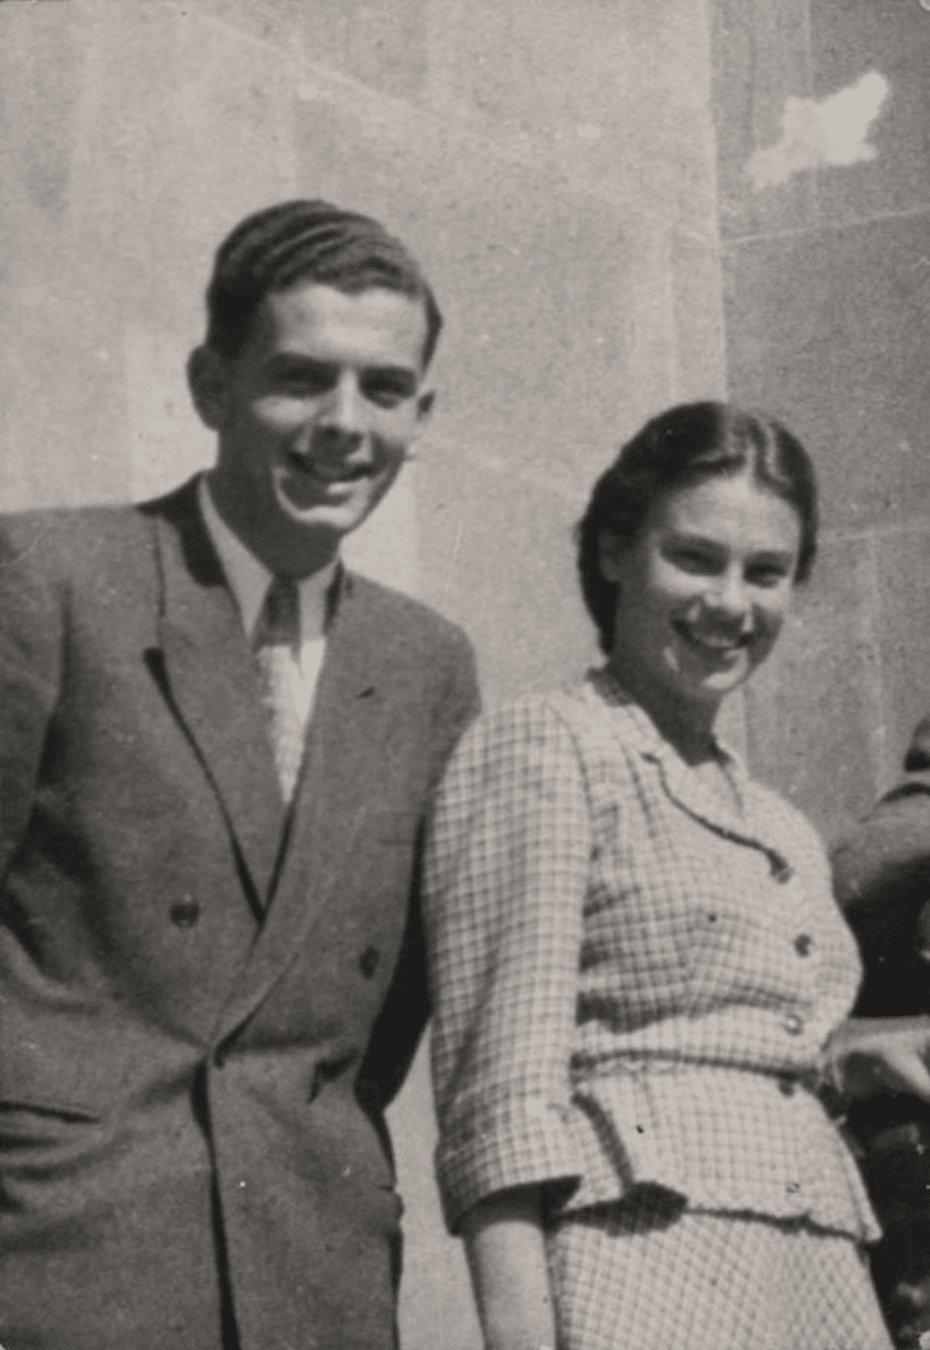 Alexander and his wife Judith in Košice, Slovakia, 1948.